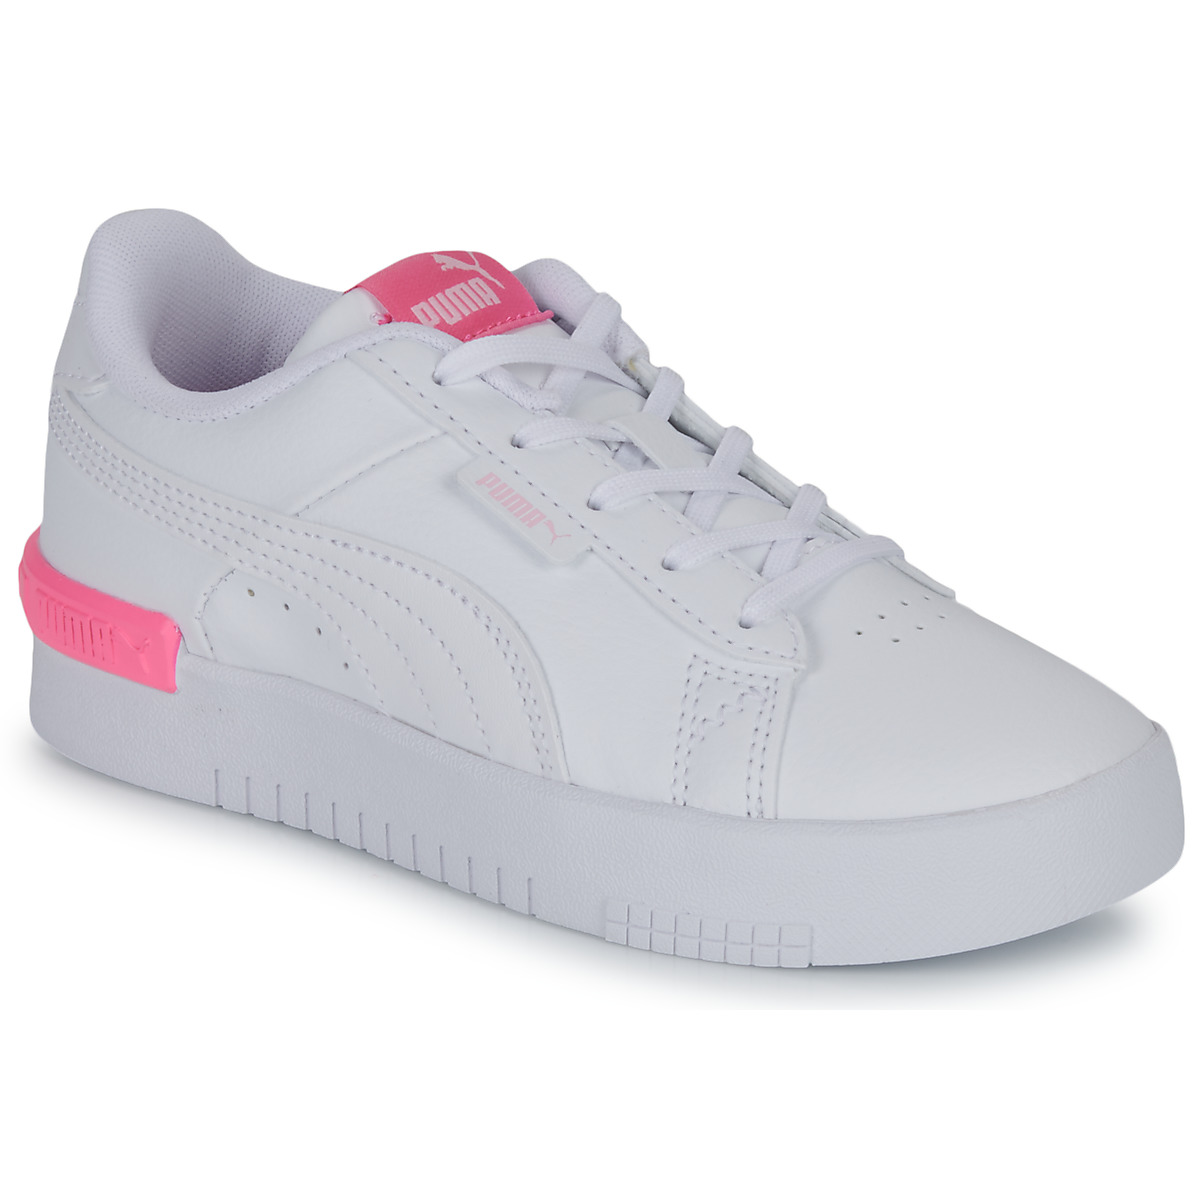 Sapatos Rapariga Sapatilhas Puma Jada PS Branco / Rosa